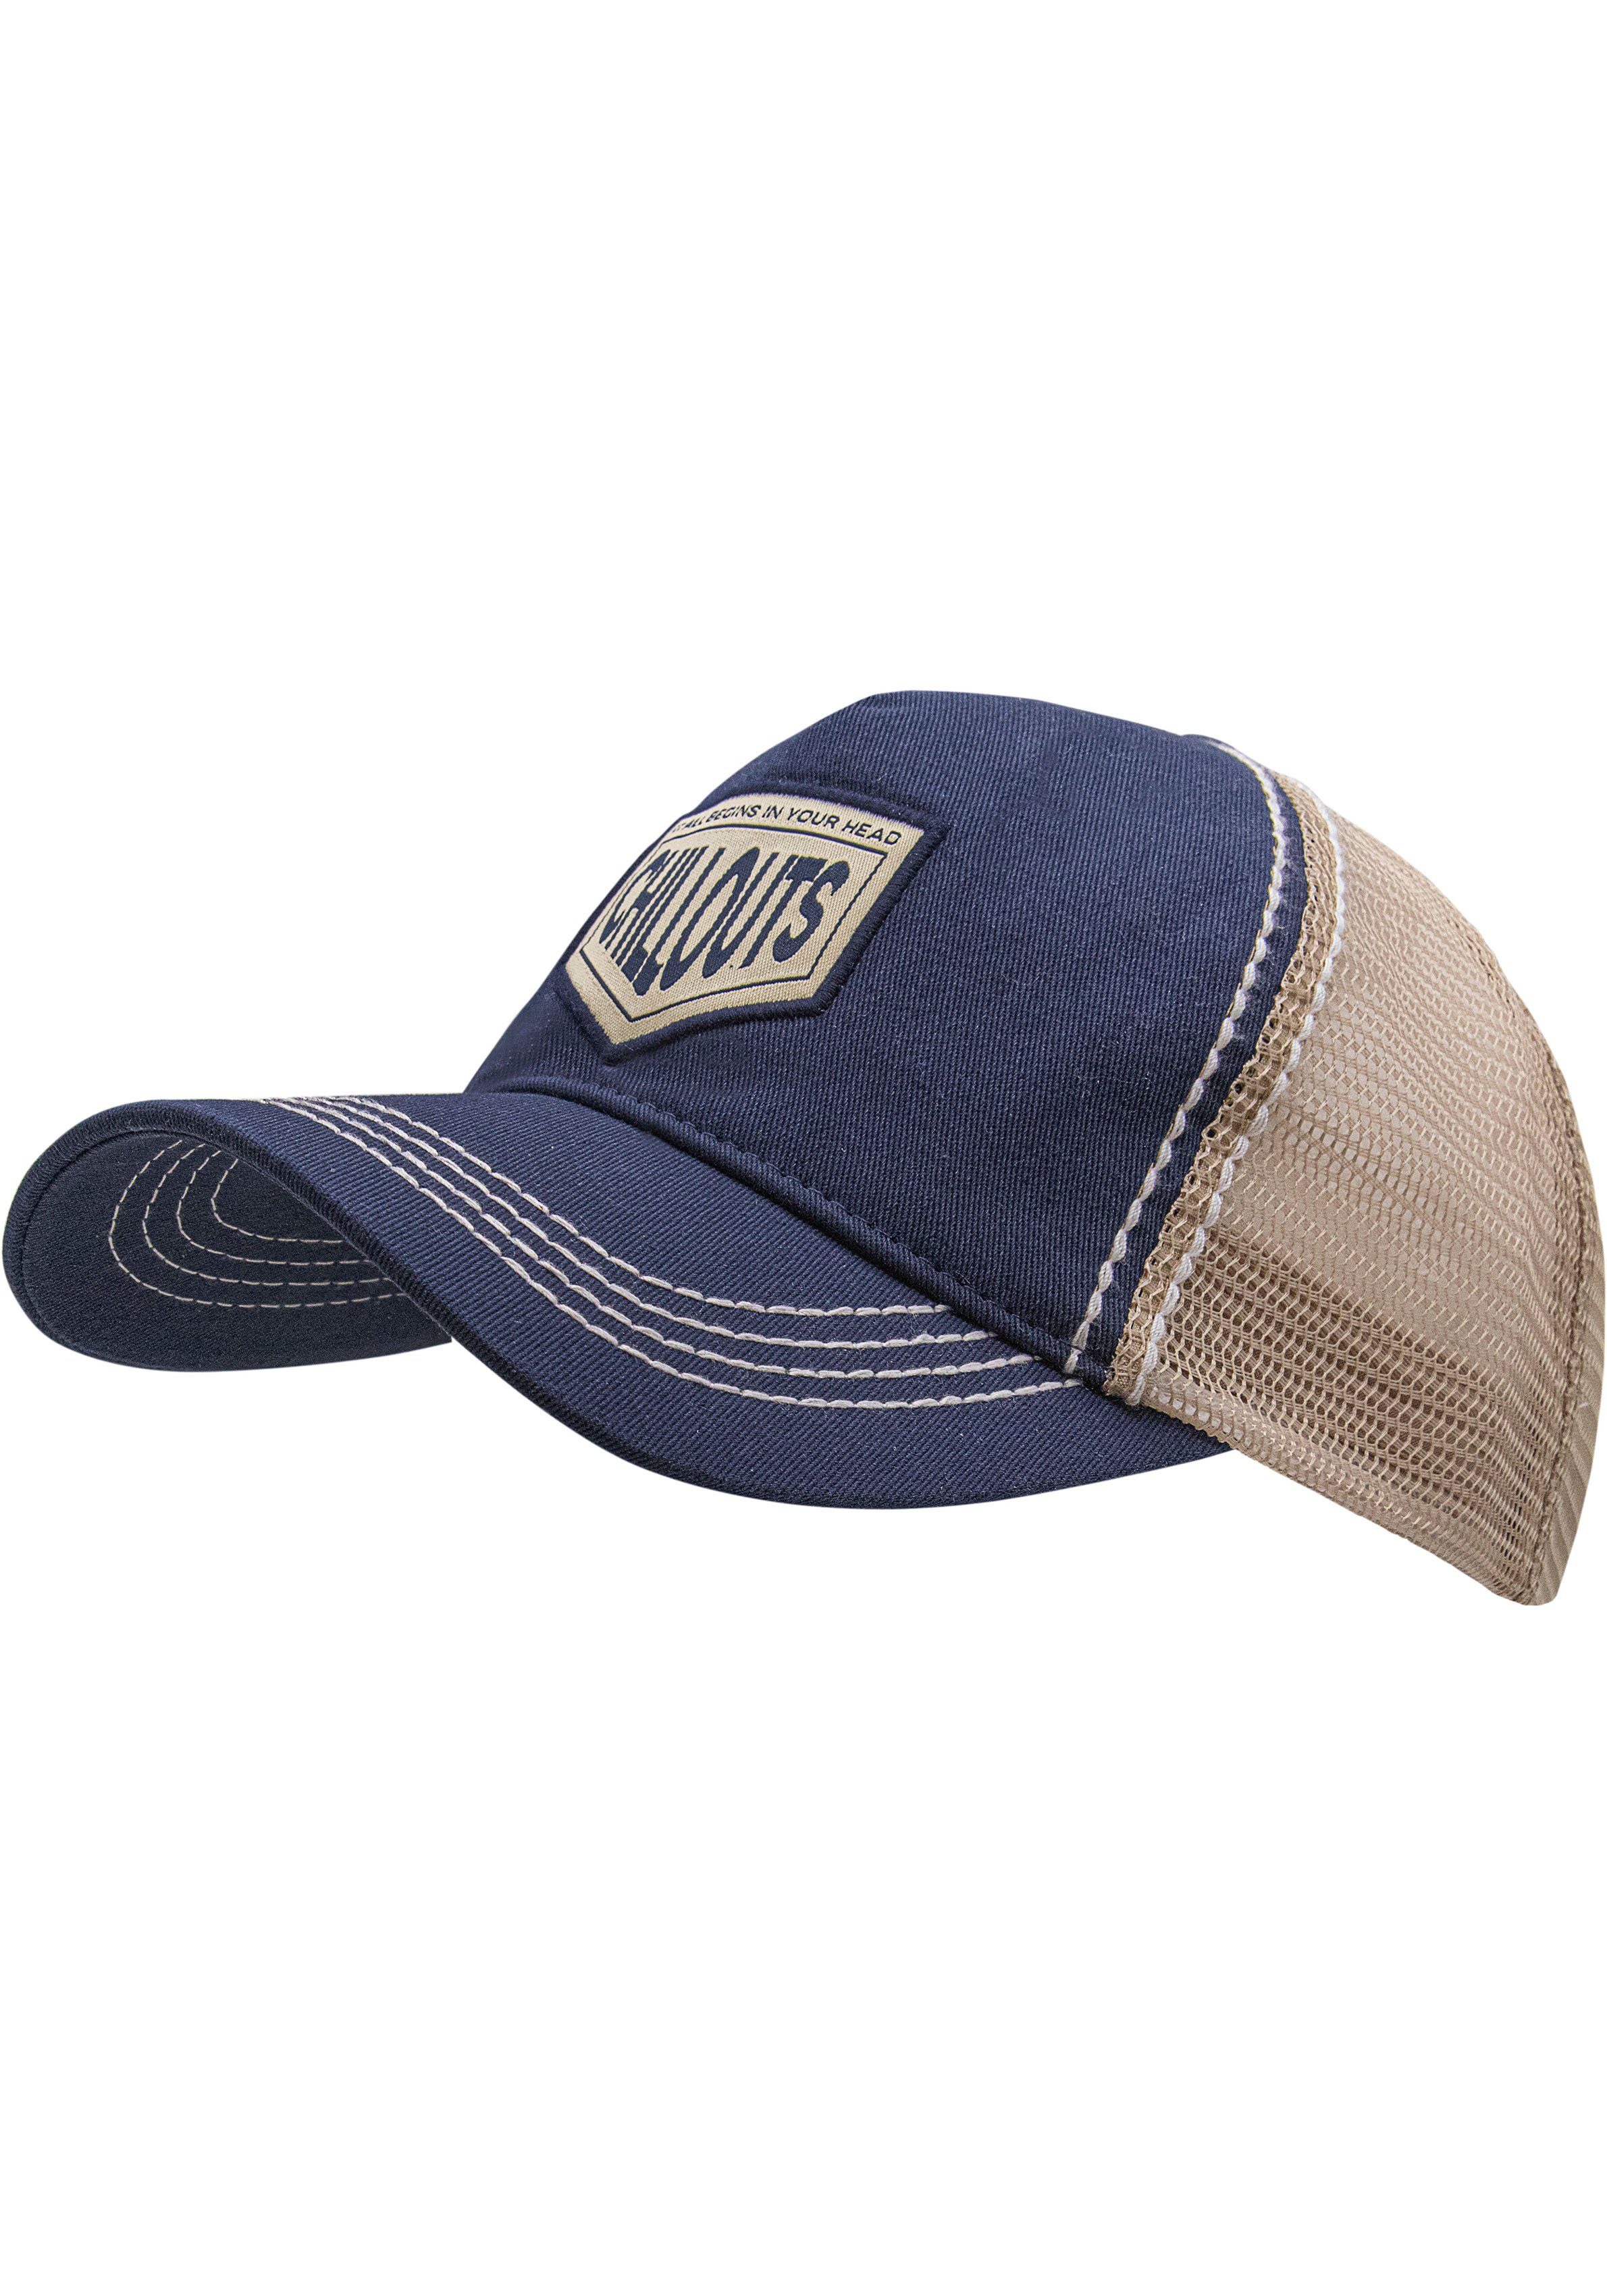 Baseball Portsmouth Kontrastfarbene Steppnaht Hat, chillouts Cap